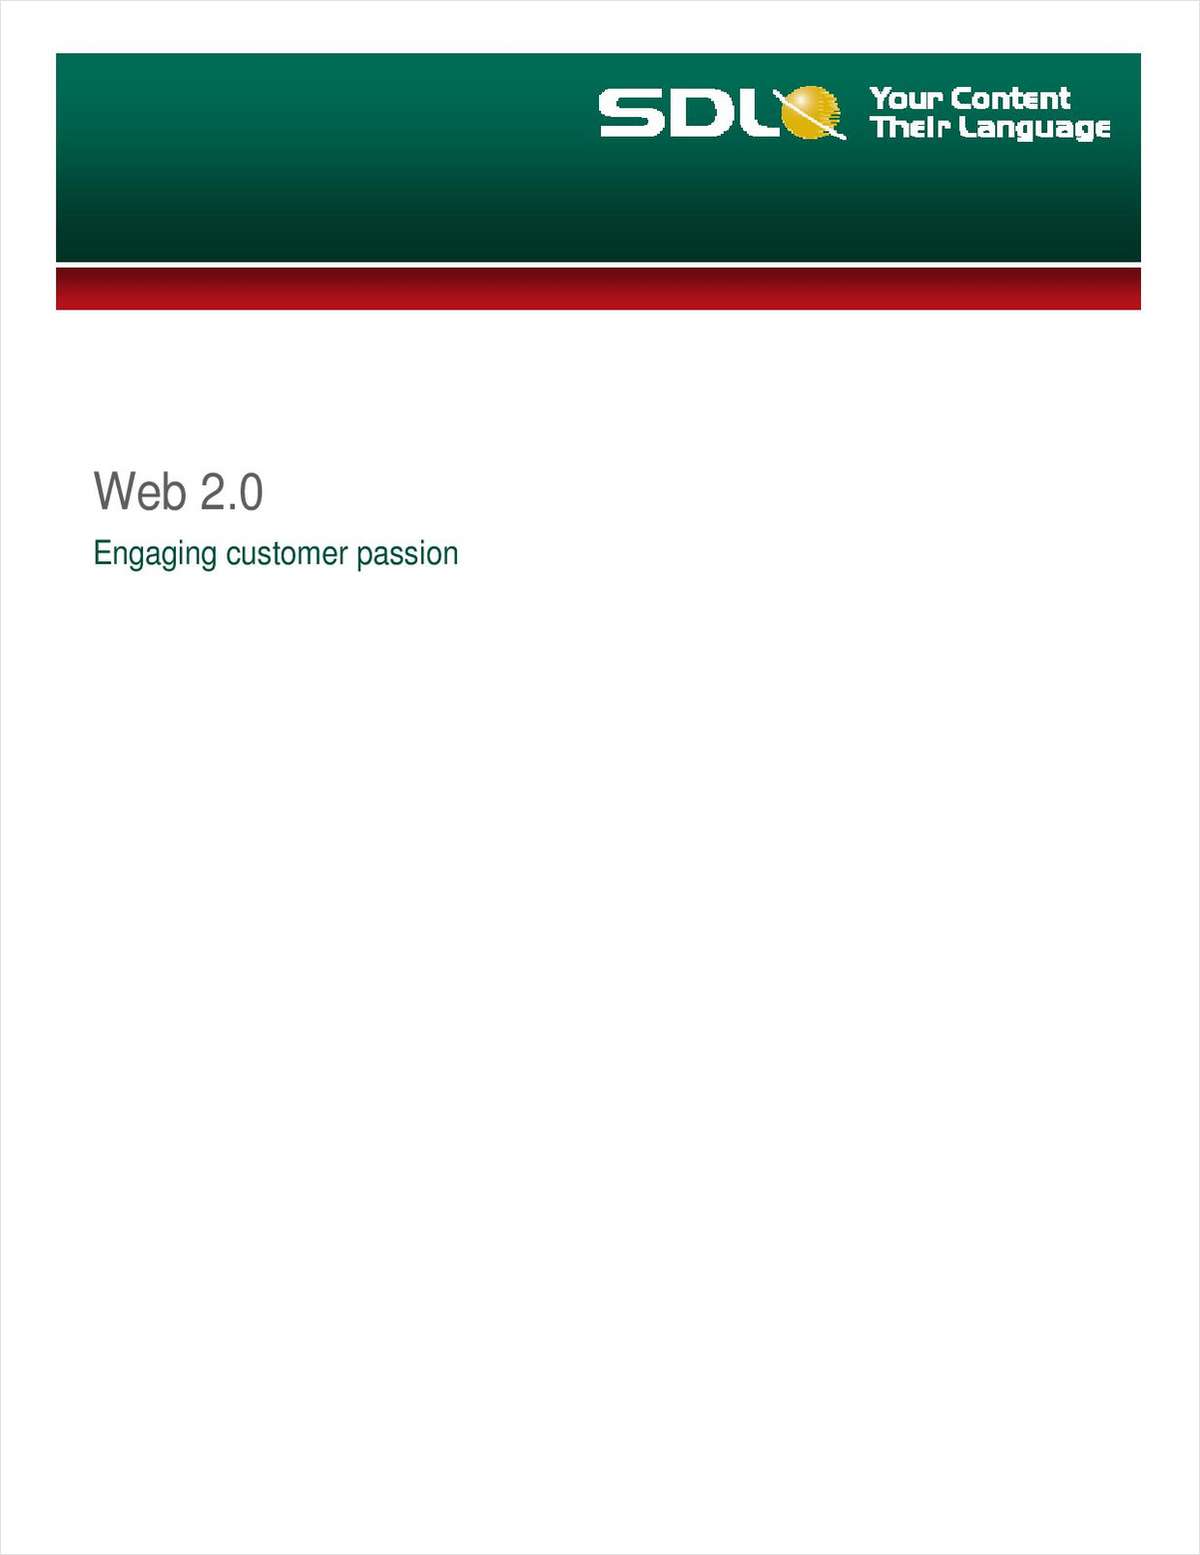 Web 2.0: Engaging Customer Passion